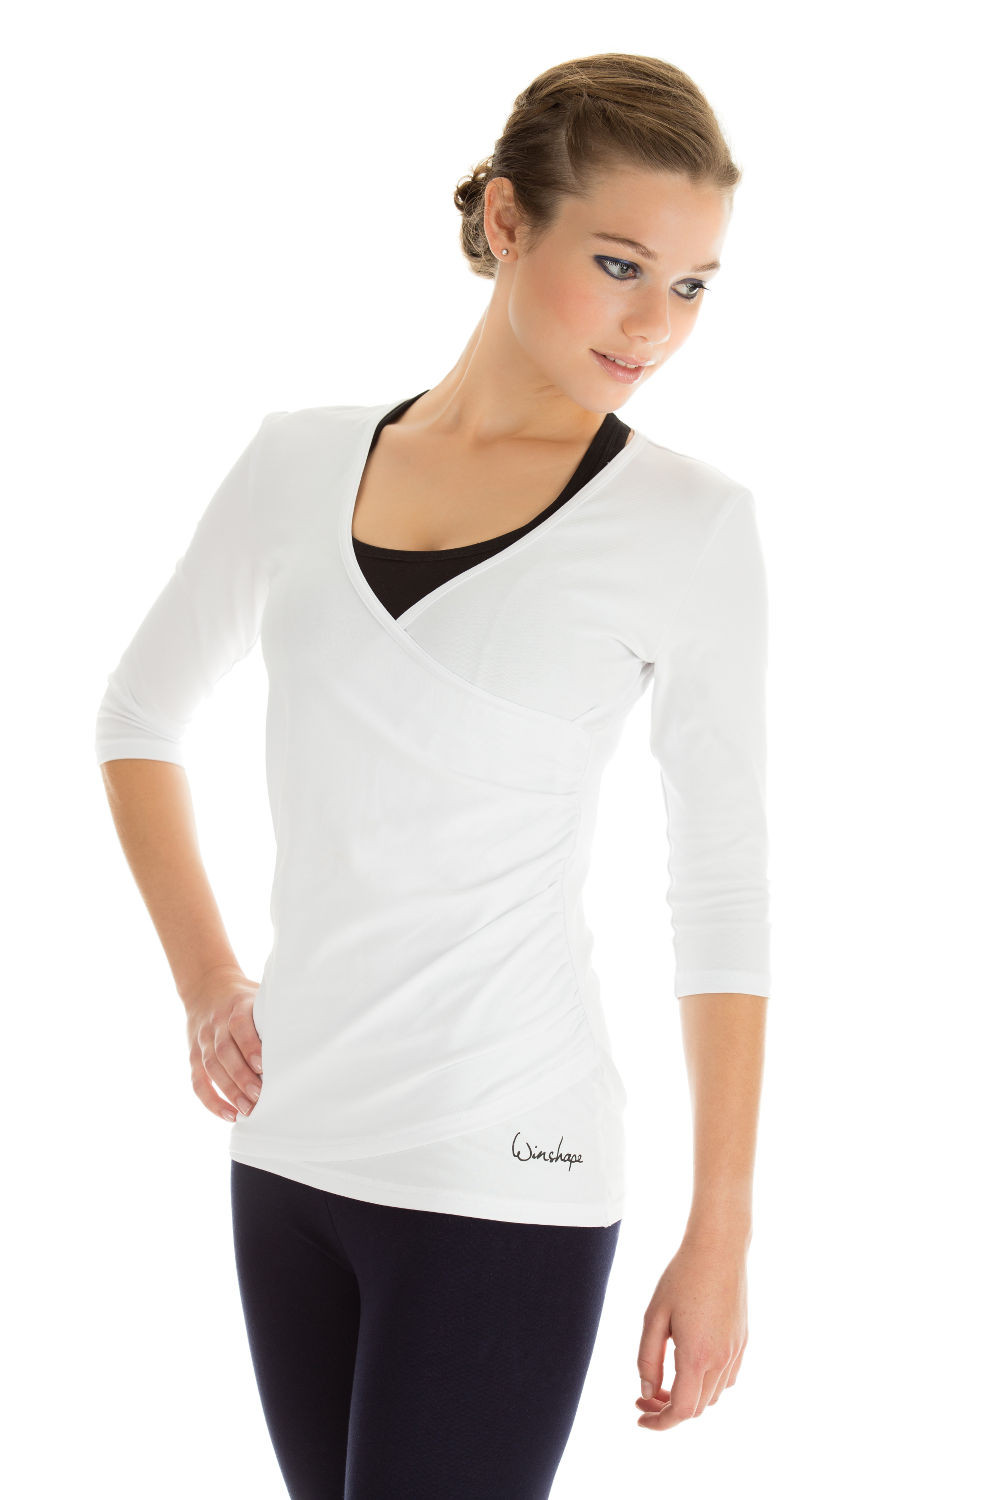 ¾-Arm Shirt in Wickeloptik weiß, Style Flow WS3, Winshape